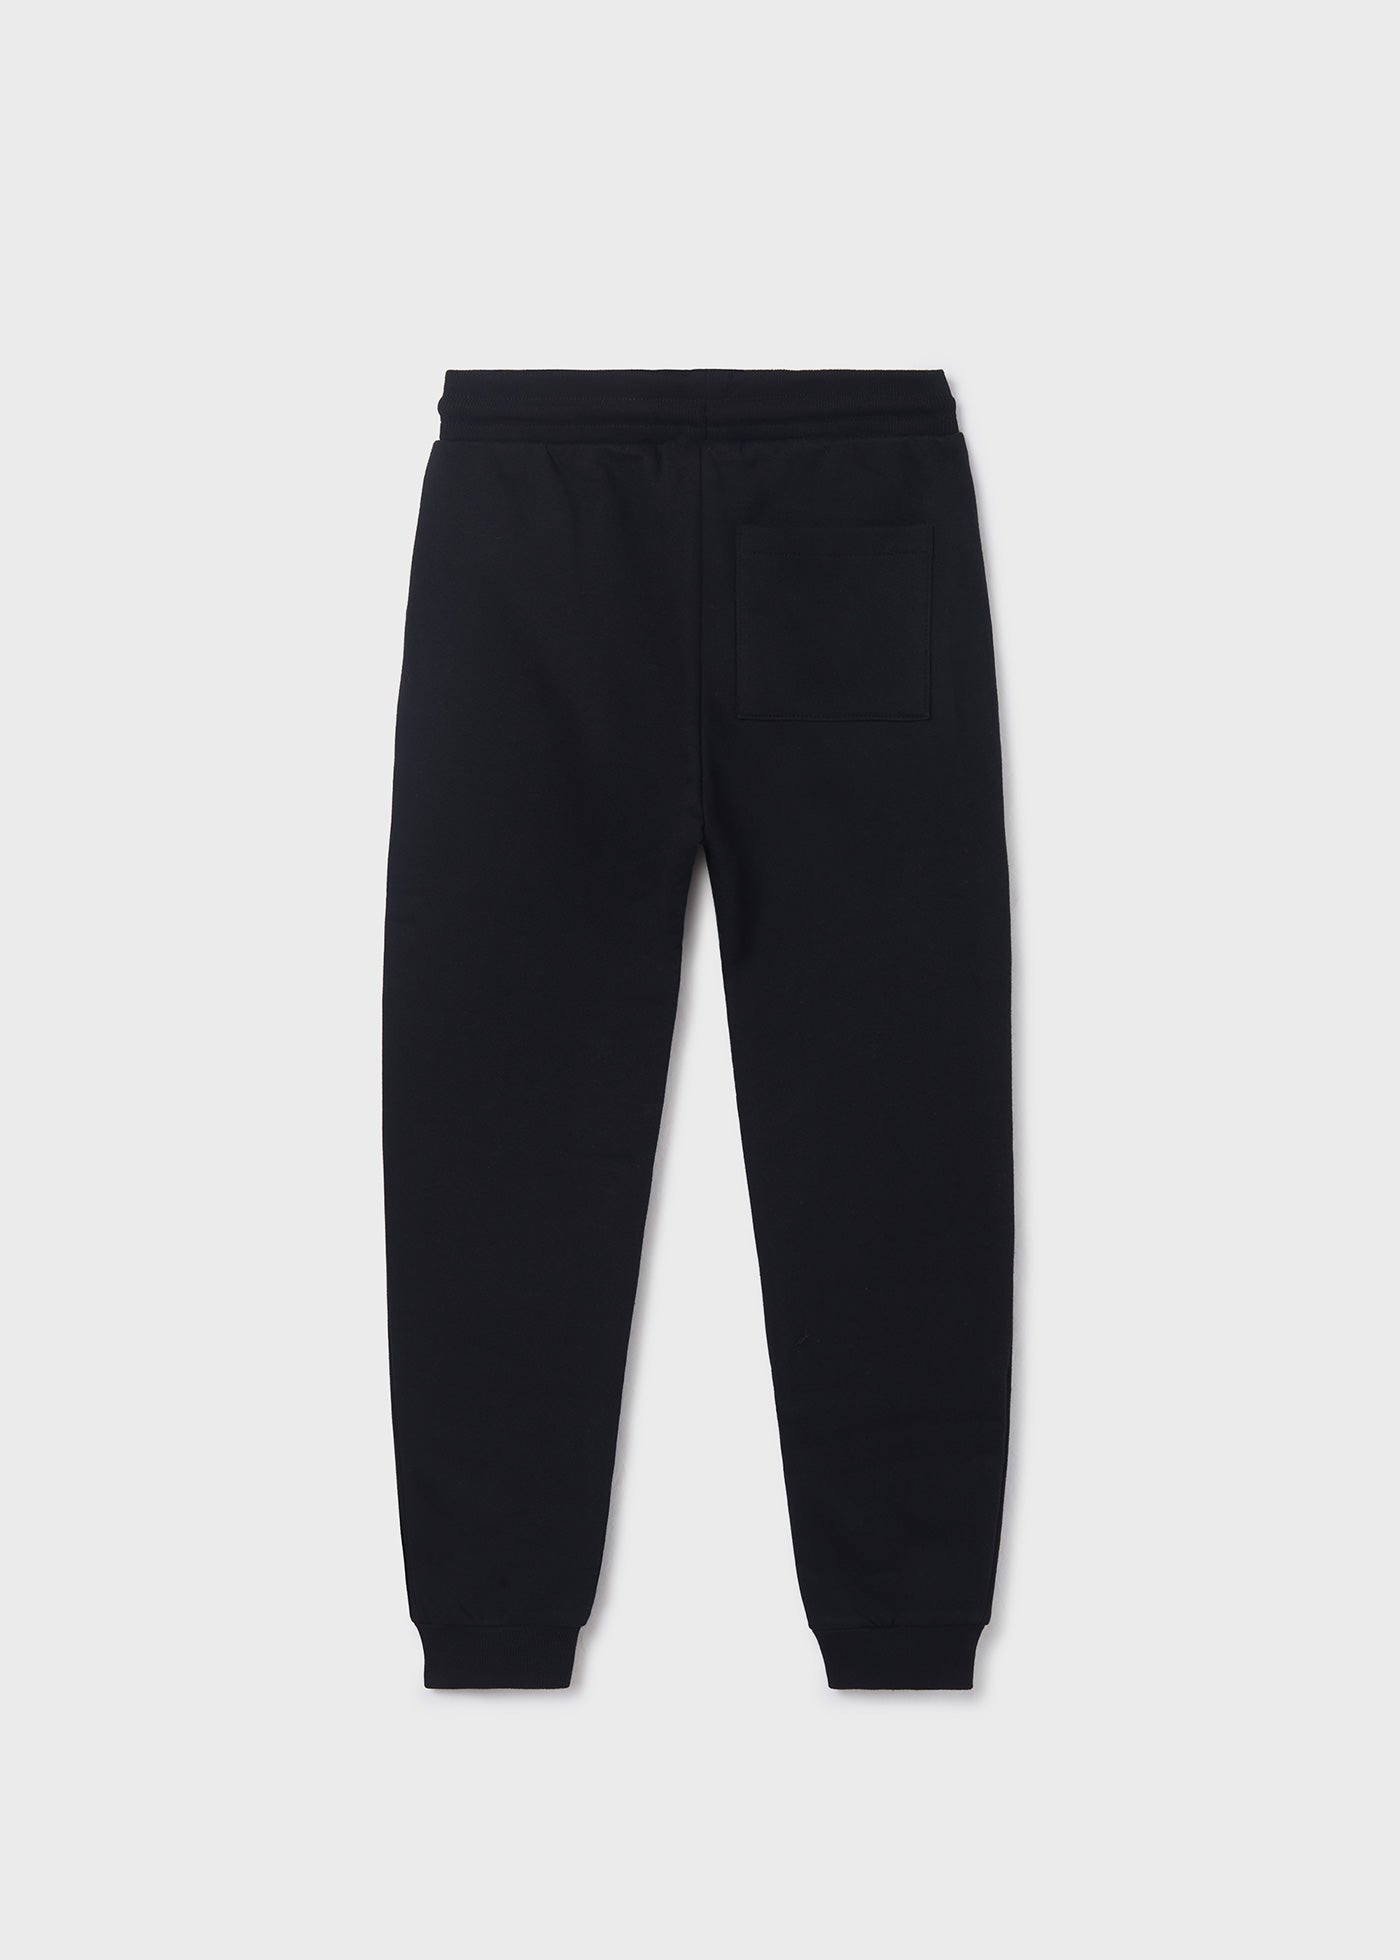 Mayoral 705-071 Kids Boy Joggers / Basic Cuffed FLeece Trousers - Black